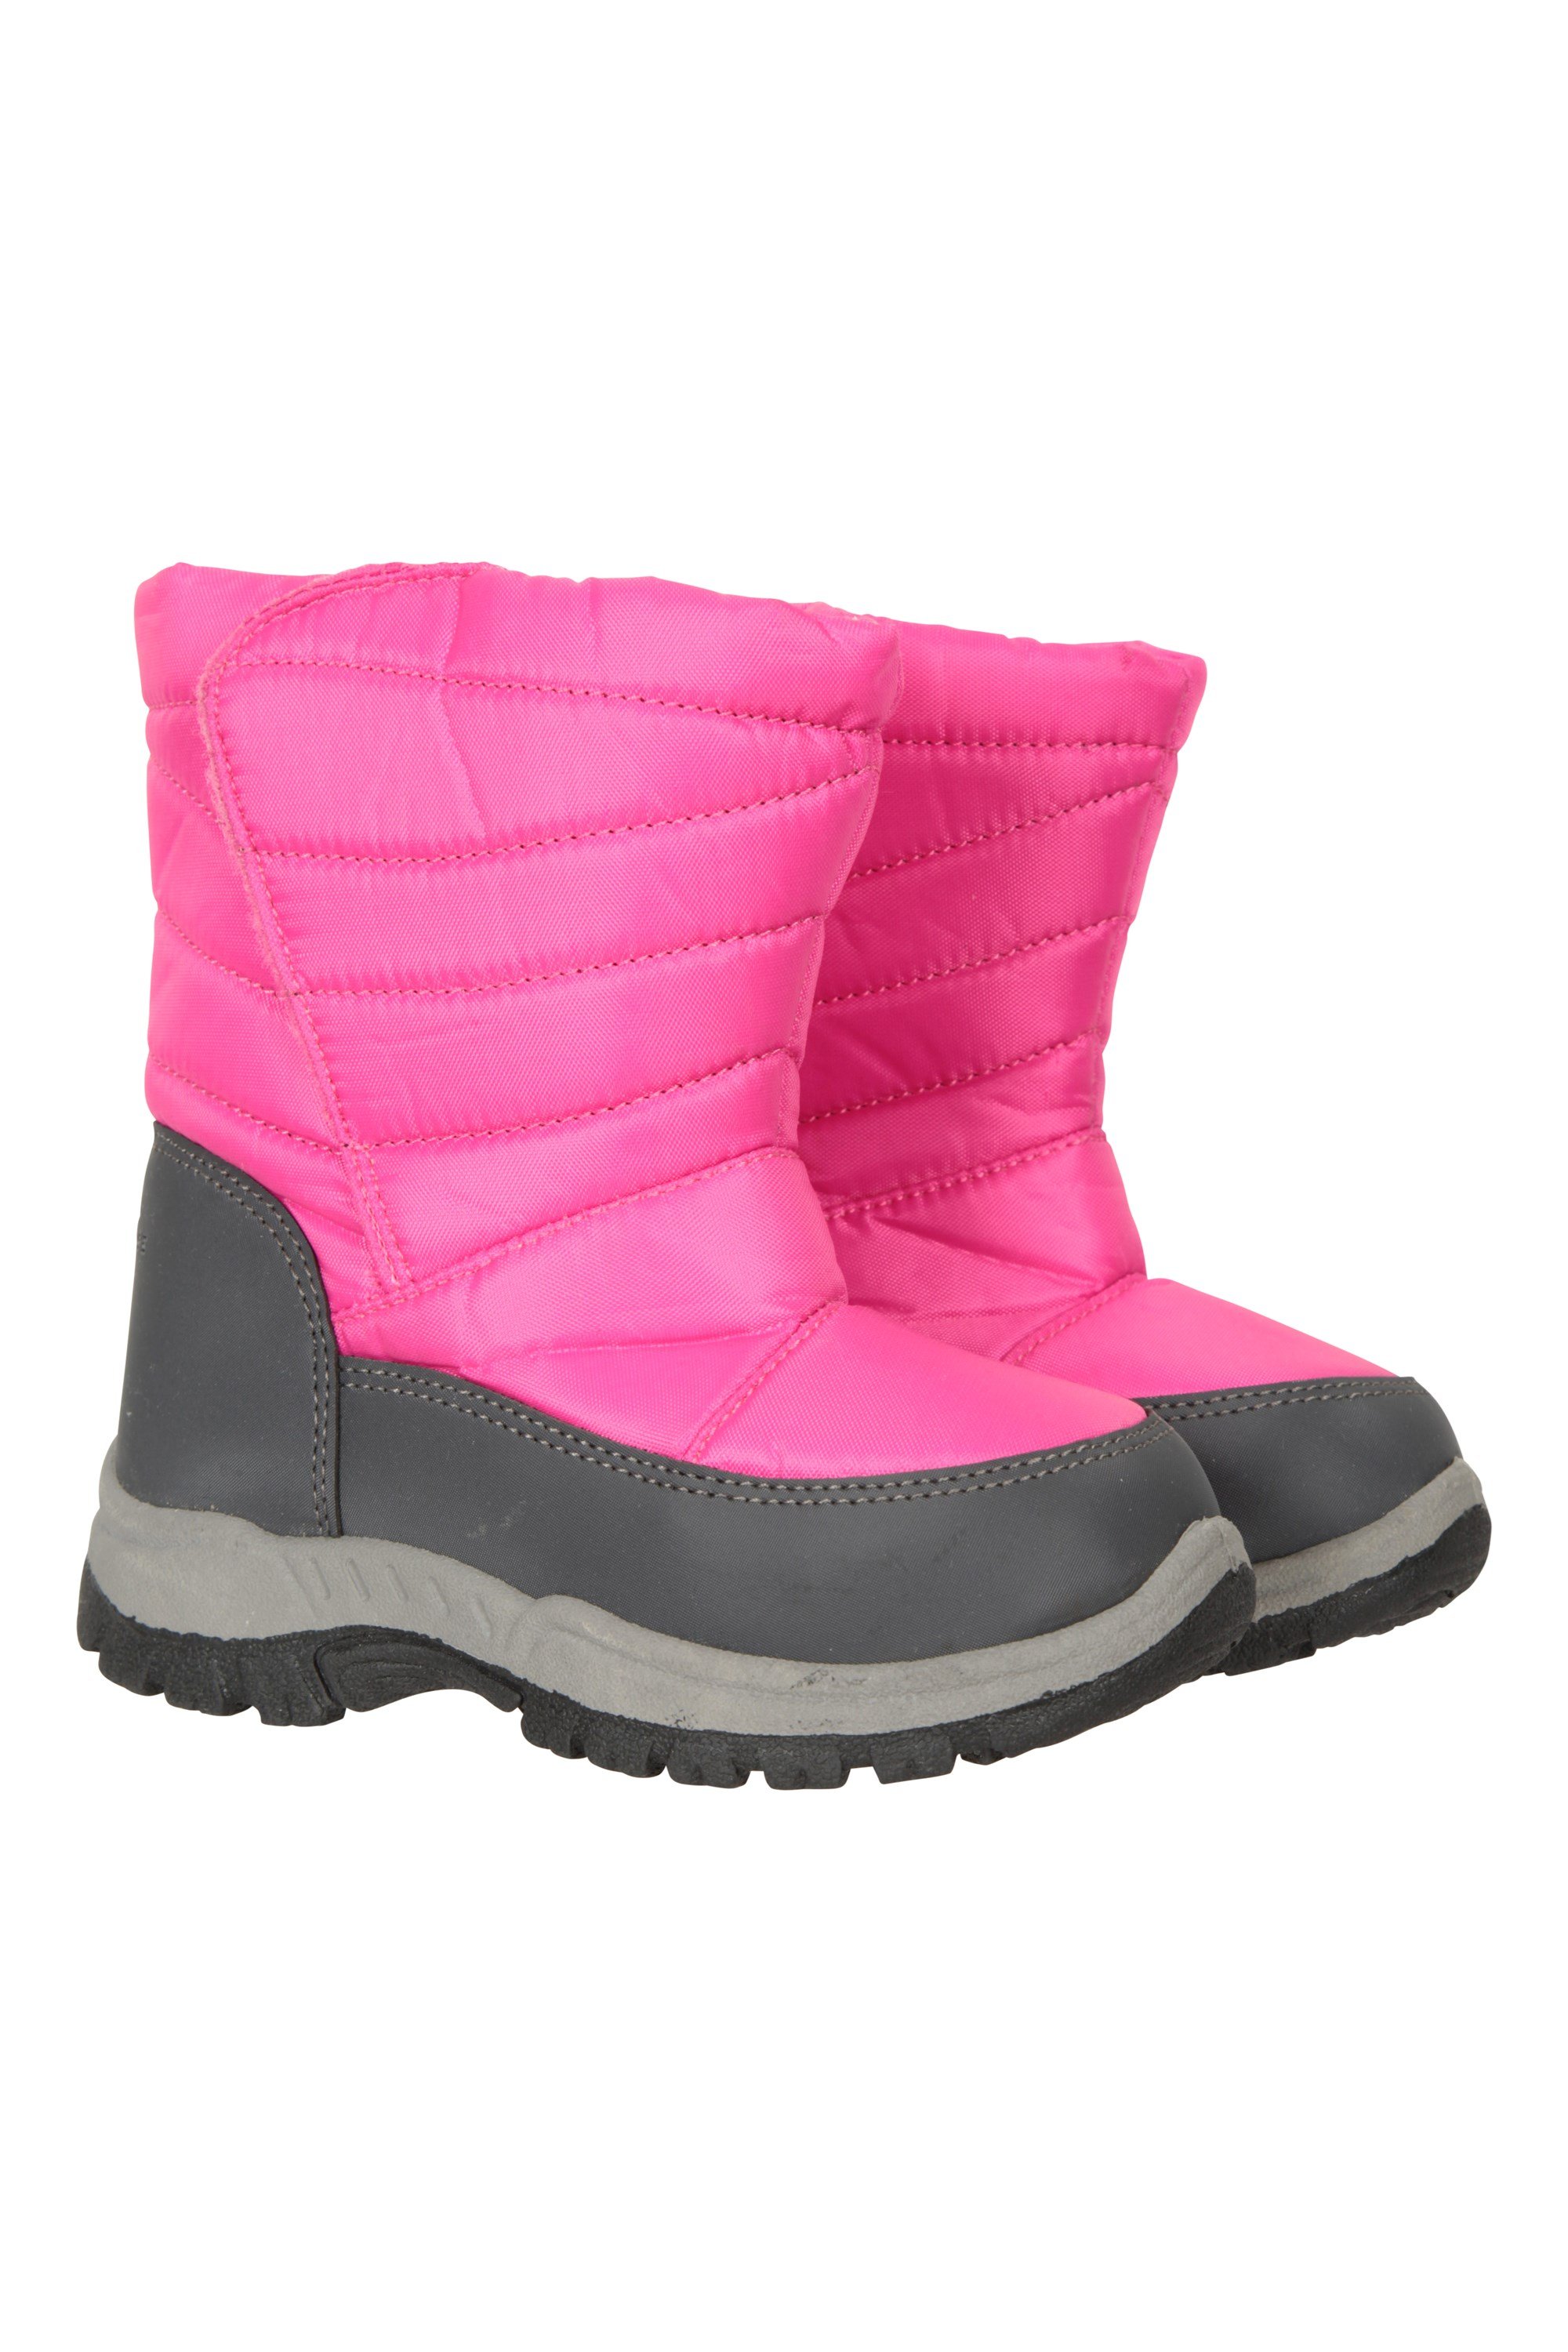 Caribou Toddler Adaptive Snow Boots - Pink